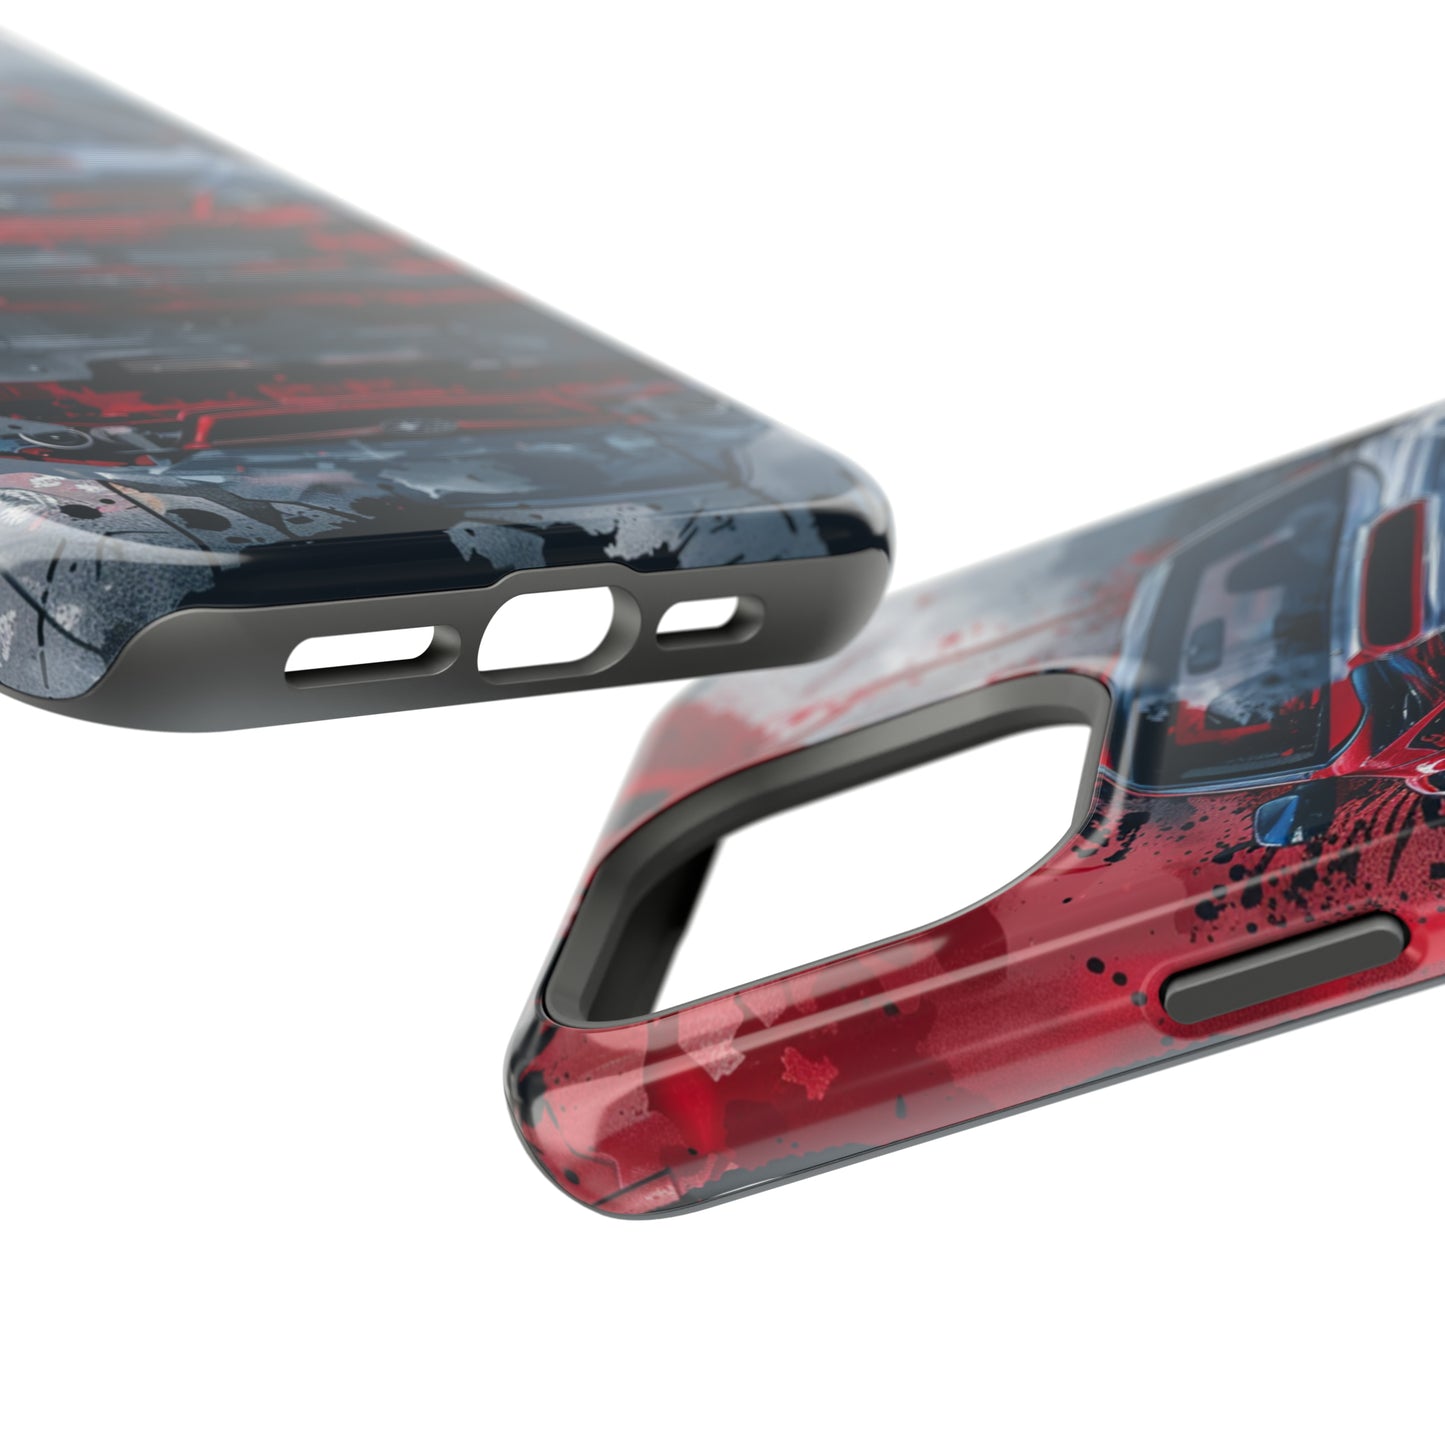 Subaru WRX STI Grunge Magsafe Tough iPhone Case